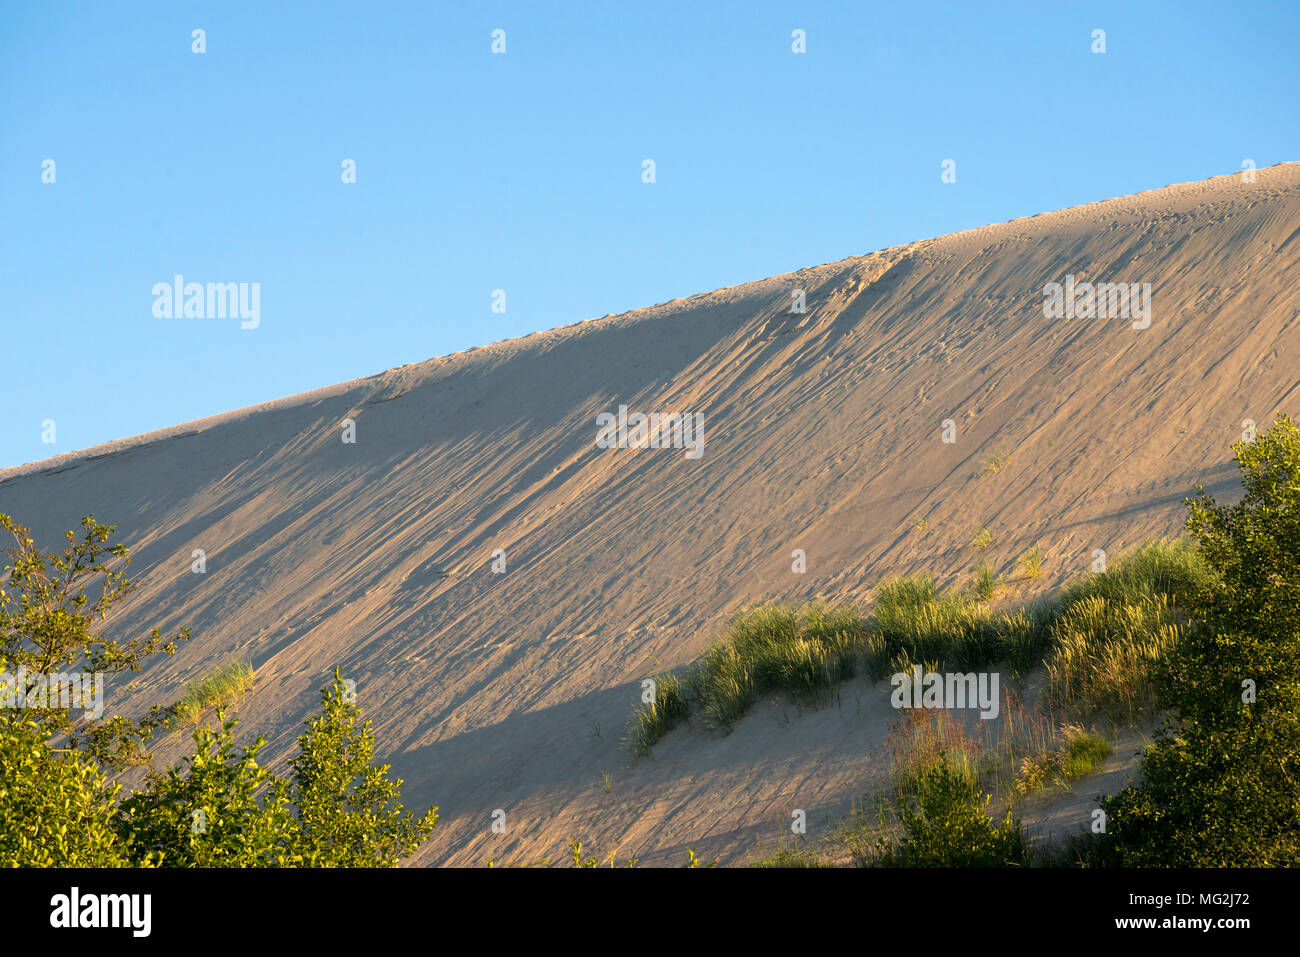 Giant Sand dune im Sommer Abend in Nida, Litauen Stockfoto